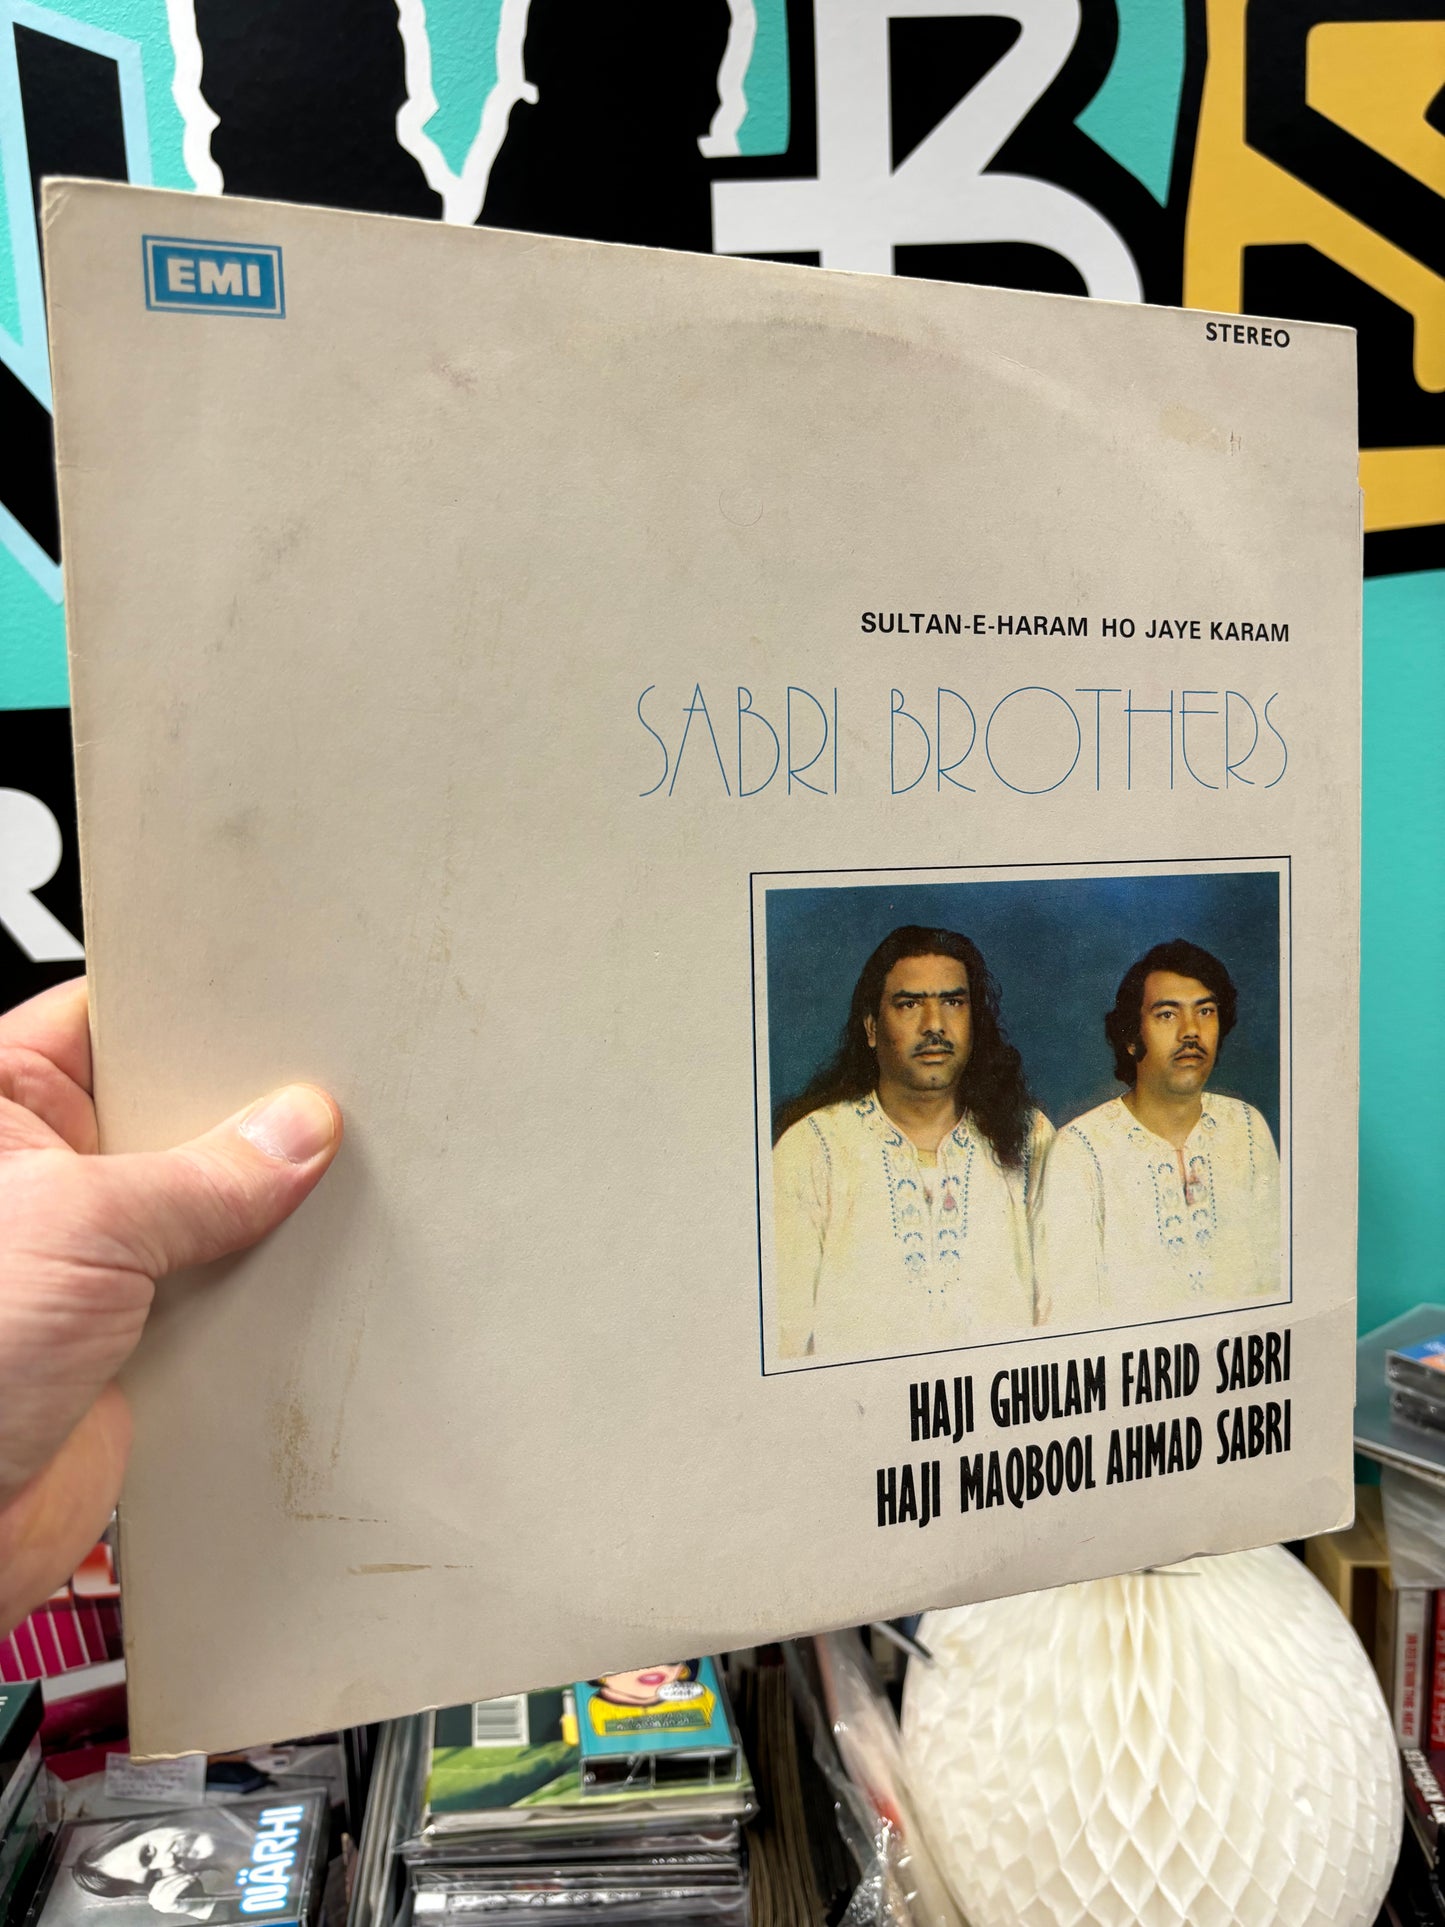 The Sabri Brothers: Sulta E Haram Ho Jaye Karam, LP, Pakistan 1978